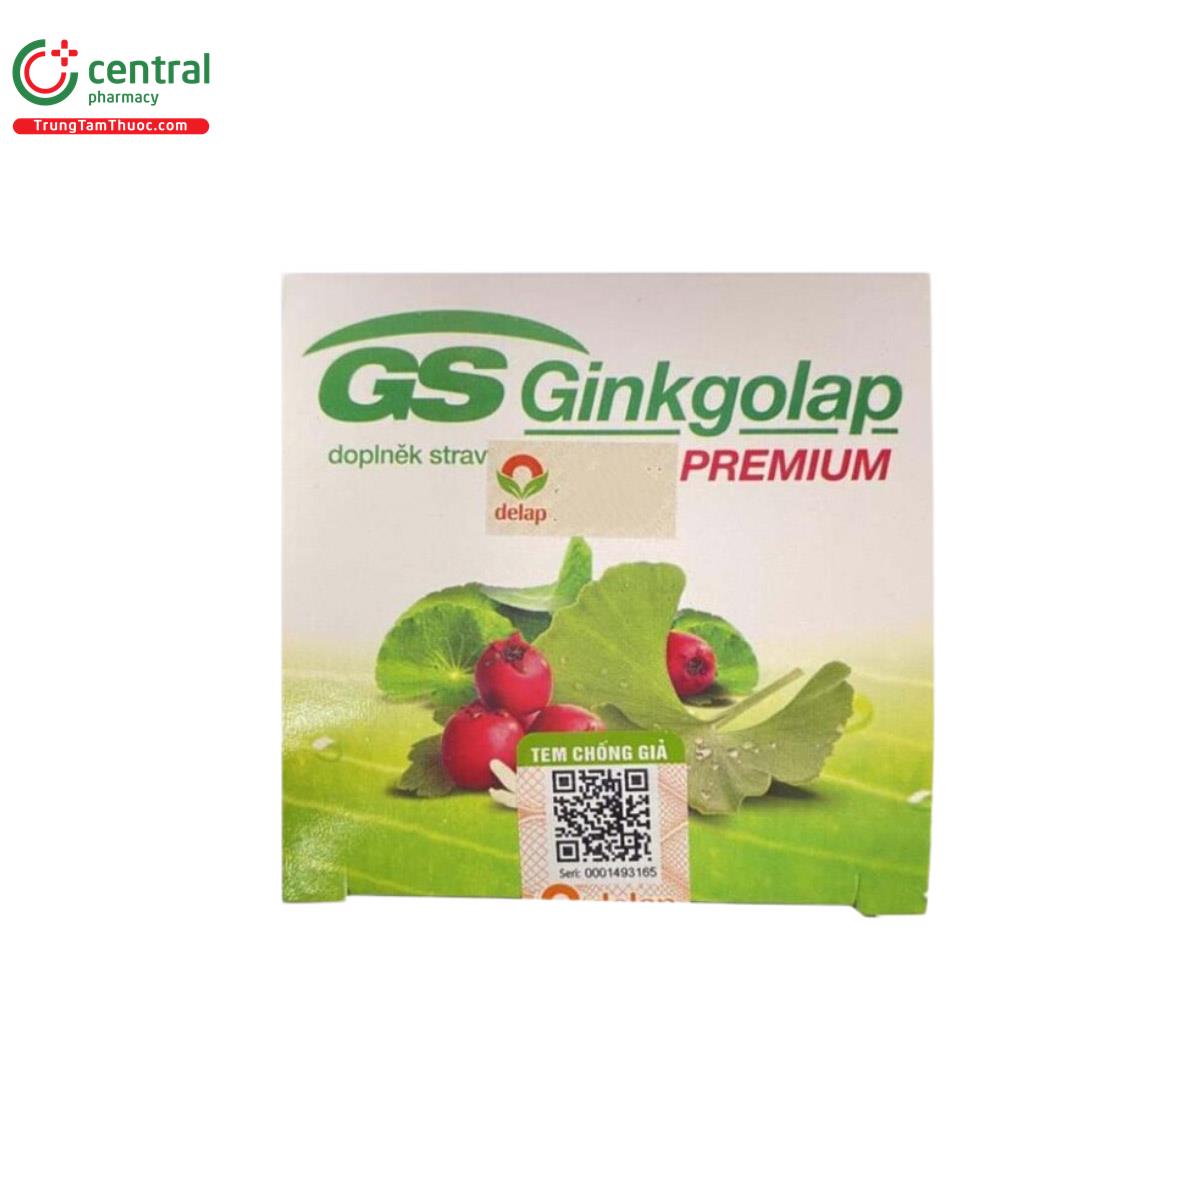 GS Ginkgolap Premium